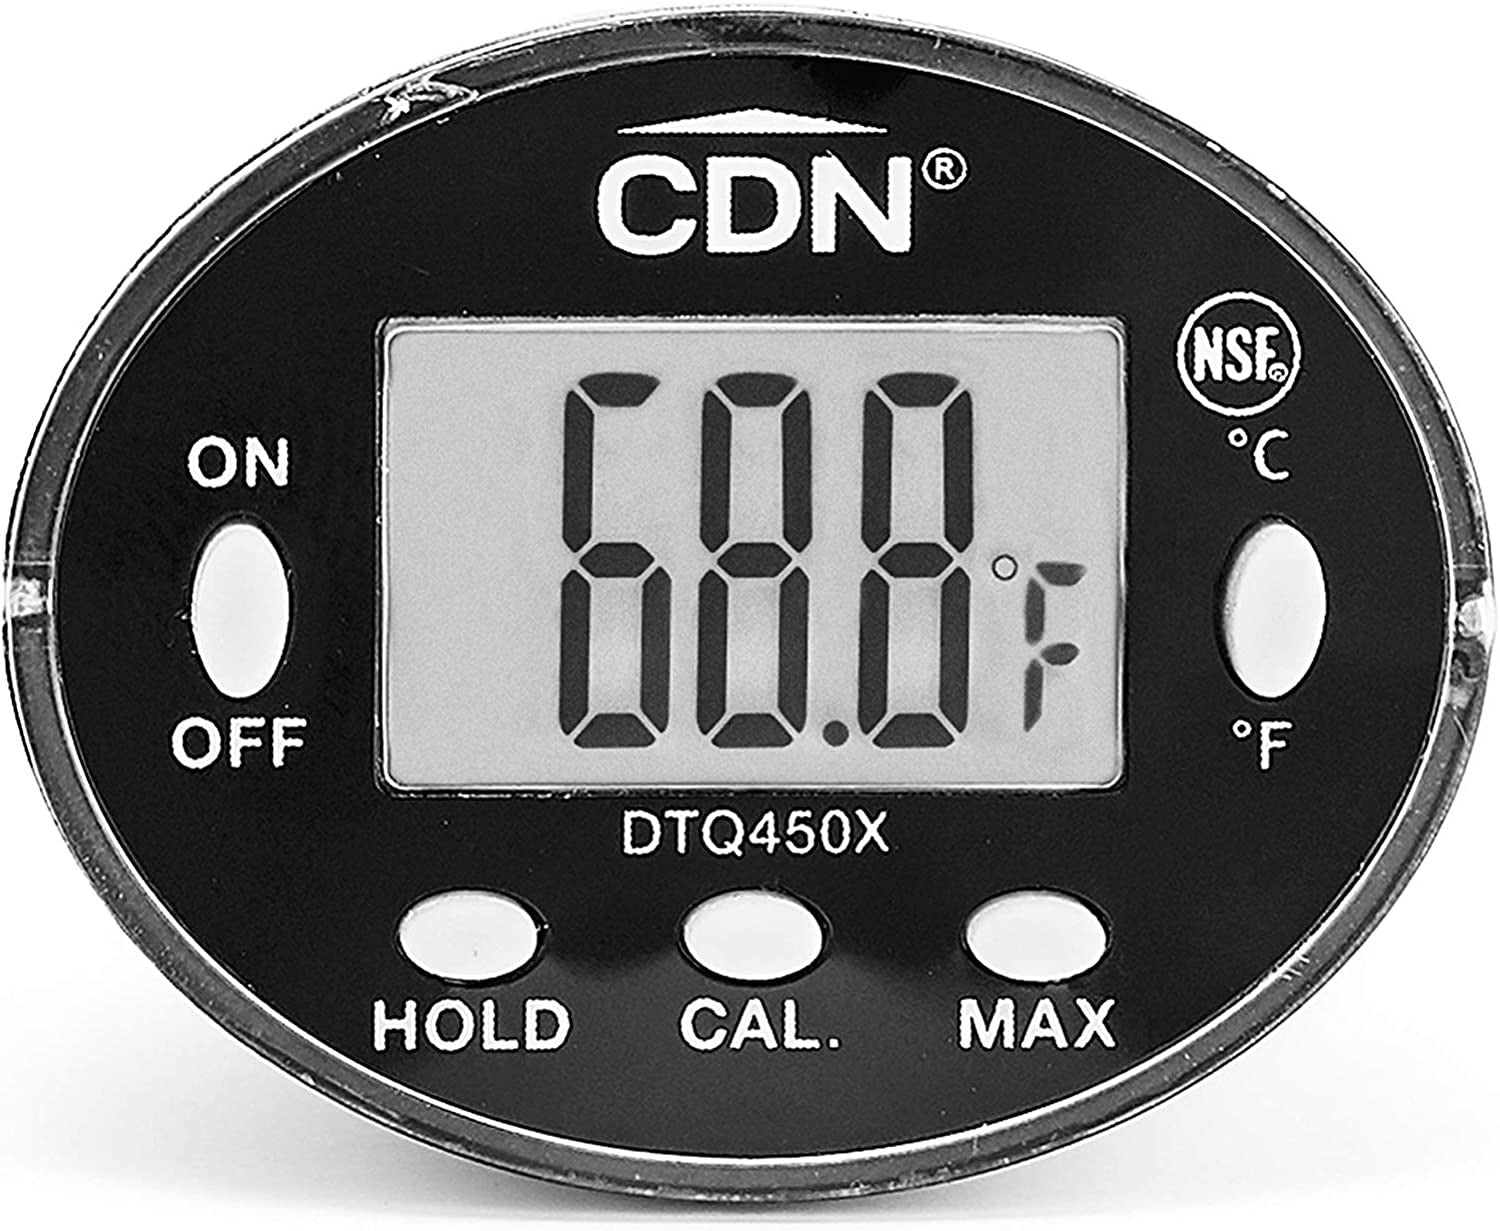 CDN Instant Read Digital Thermometer